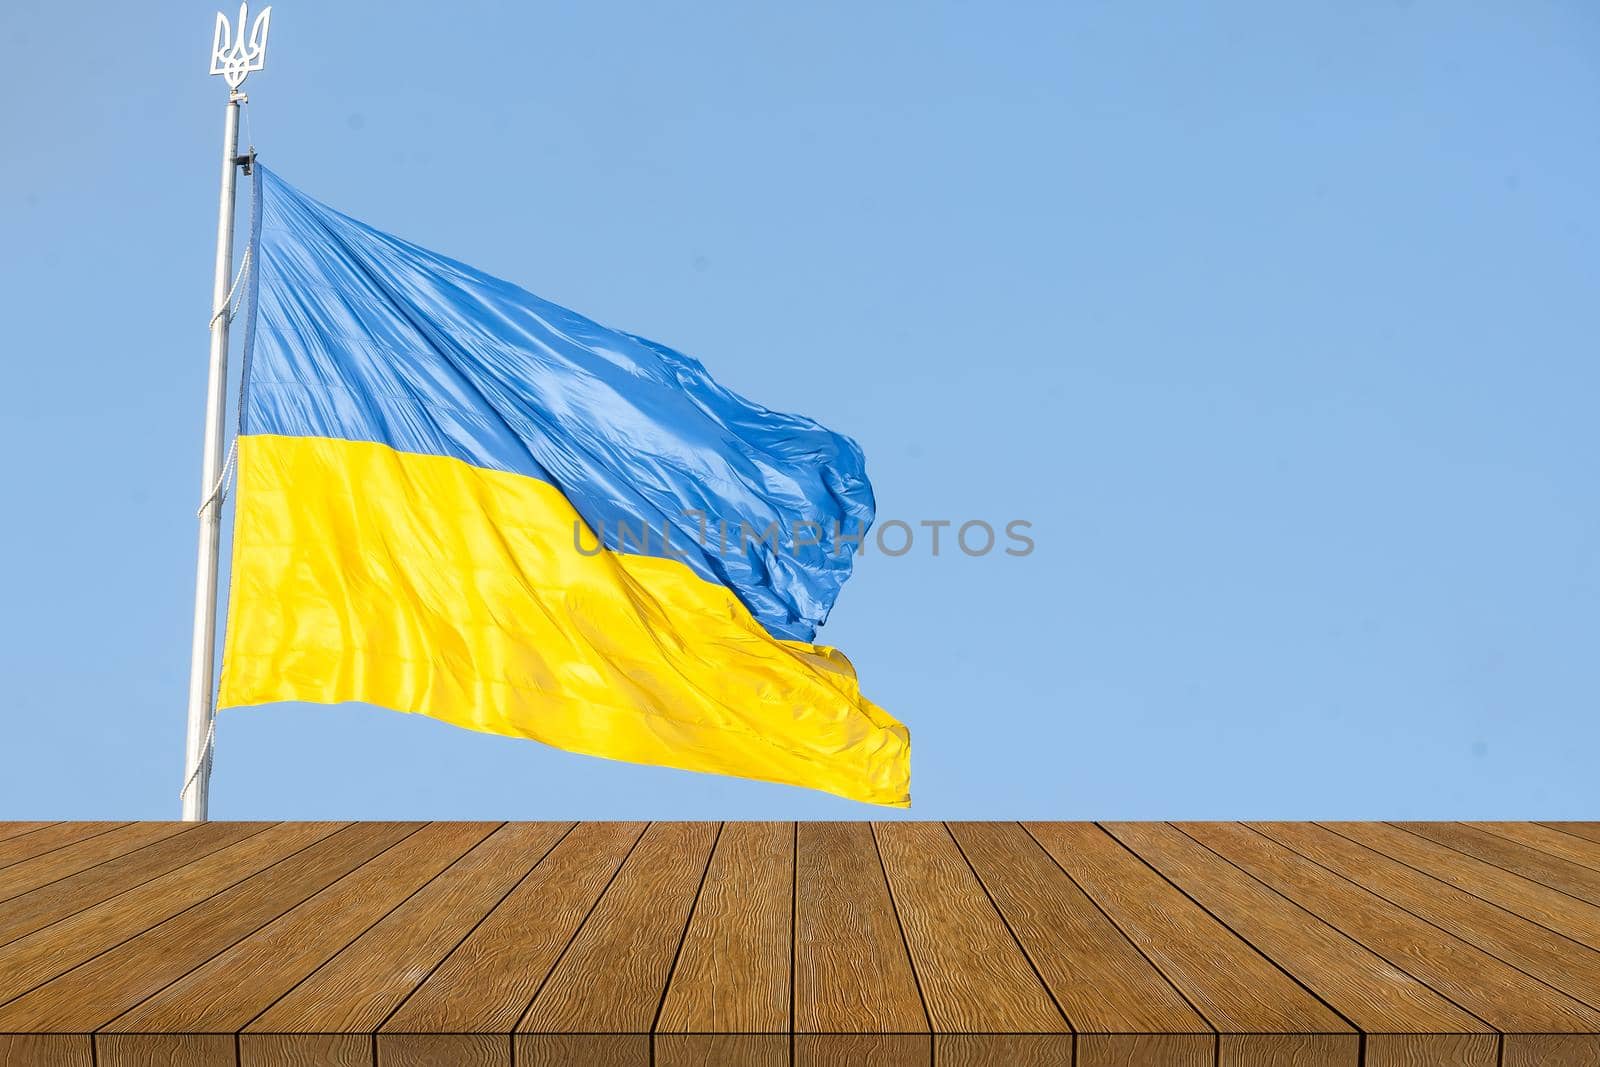 Ukraine flag on backgrounds textures tabletop, wooden board